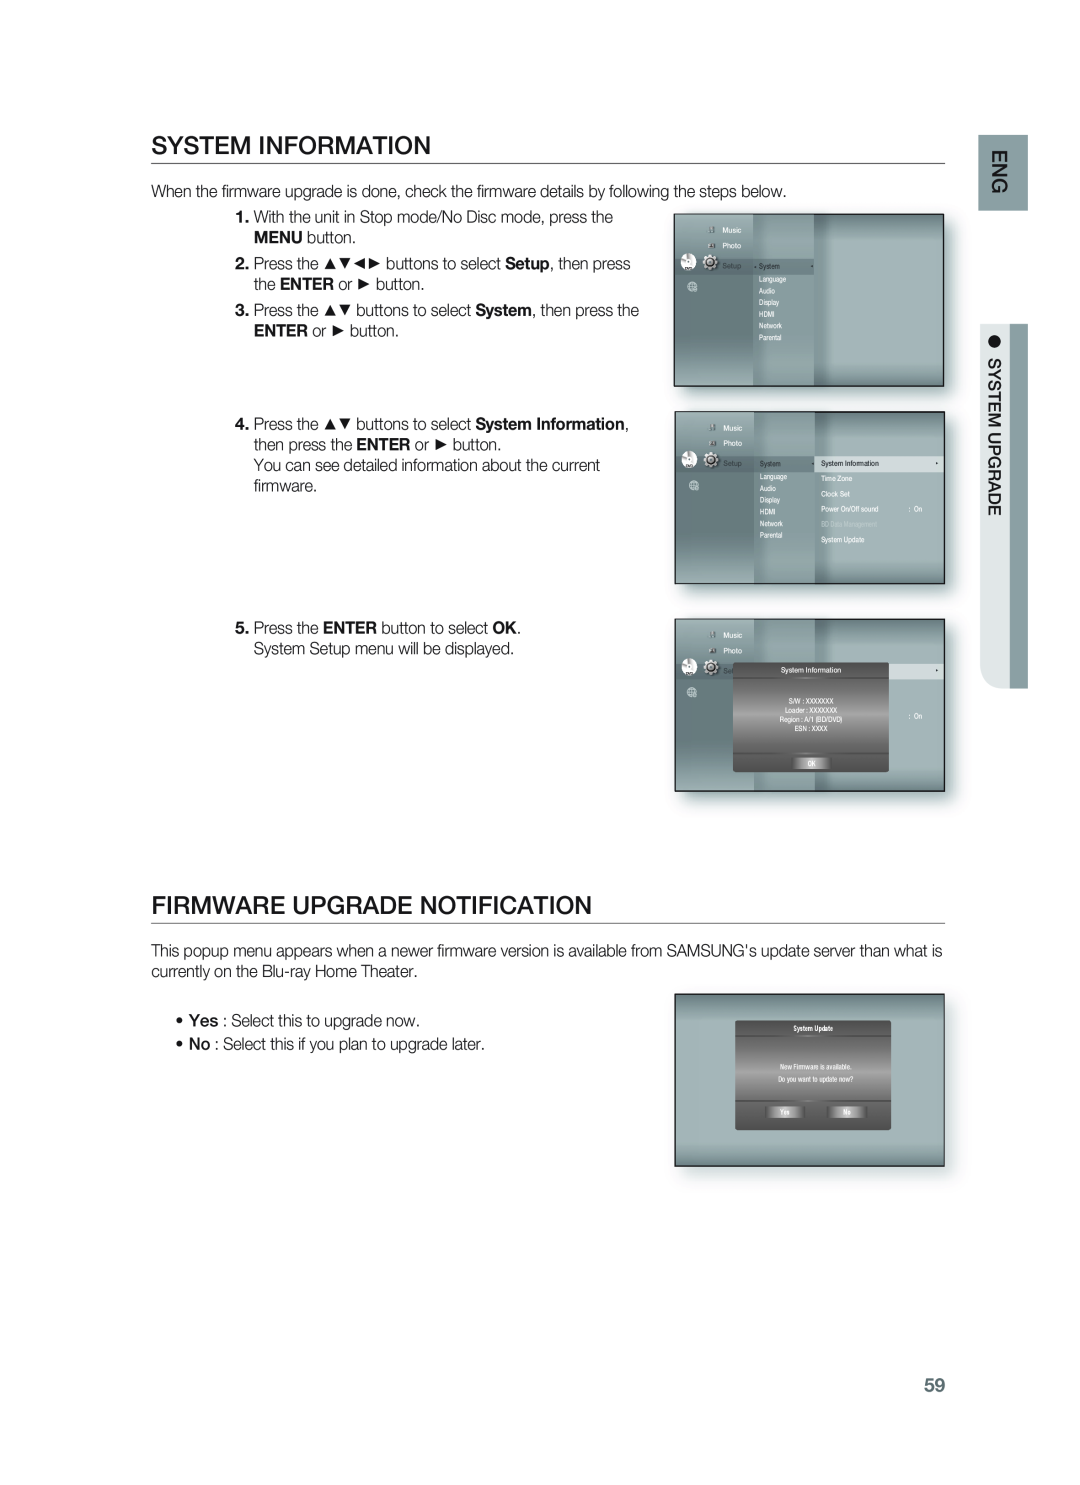 Samsung HT-BD1252, HT-BD1255 user manual System Information, Firmware Upgrade Notification 